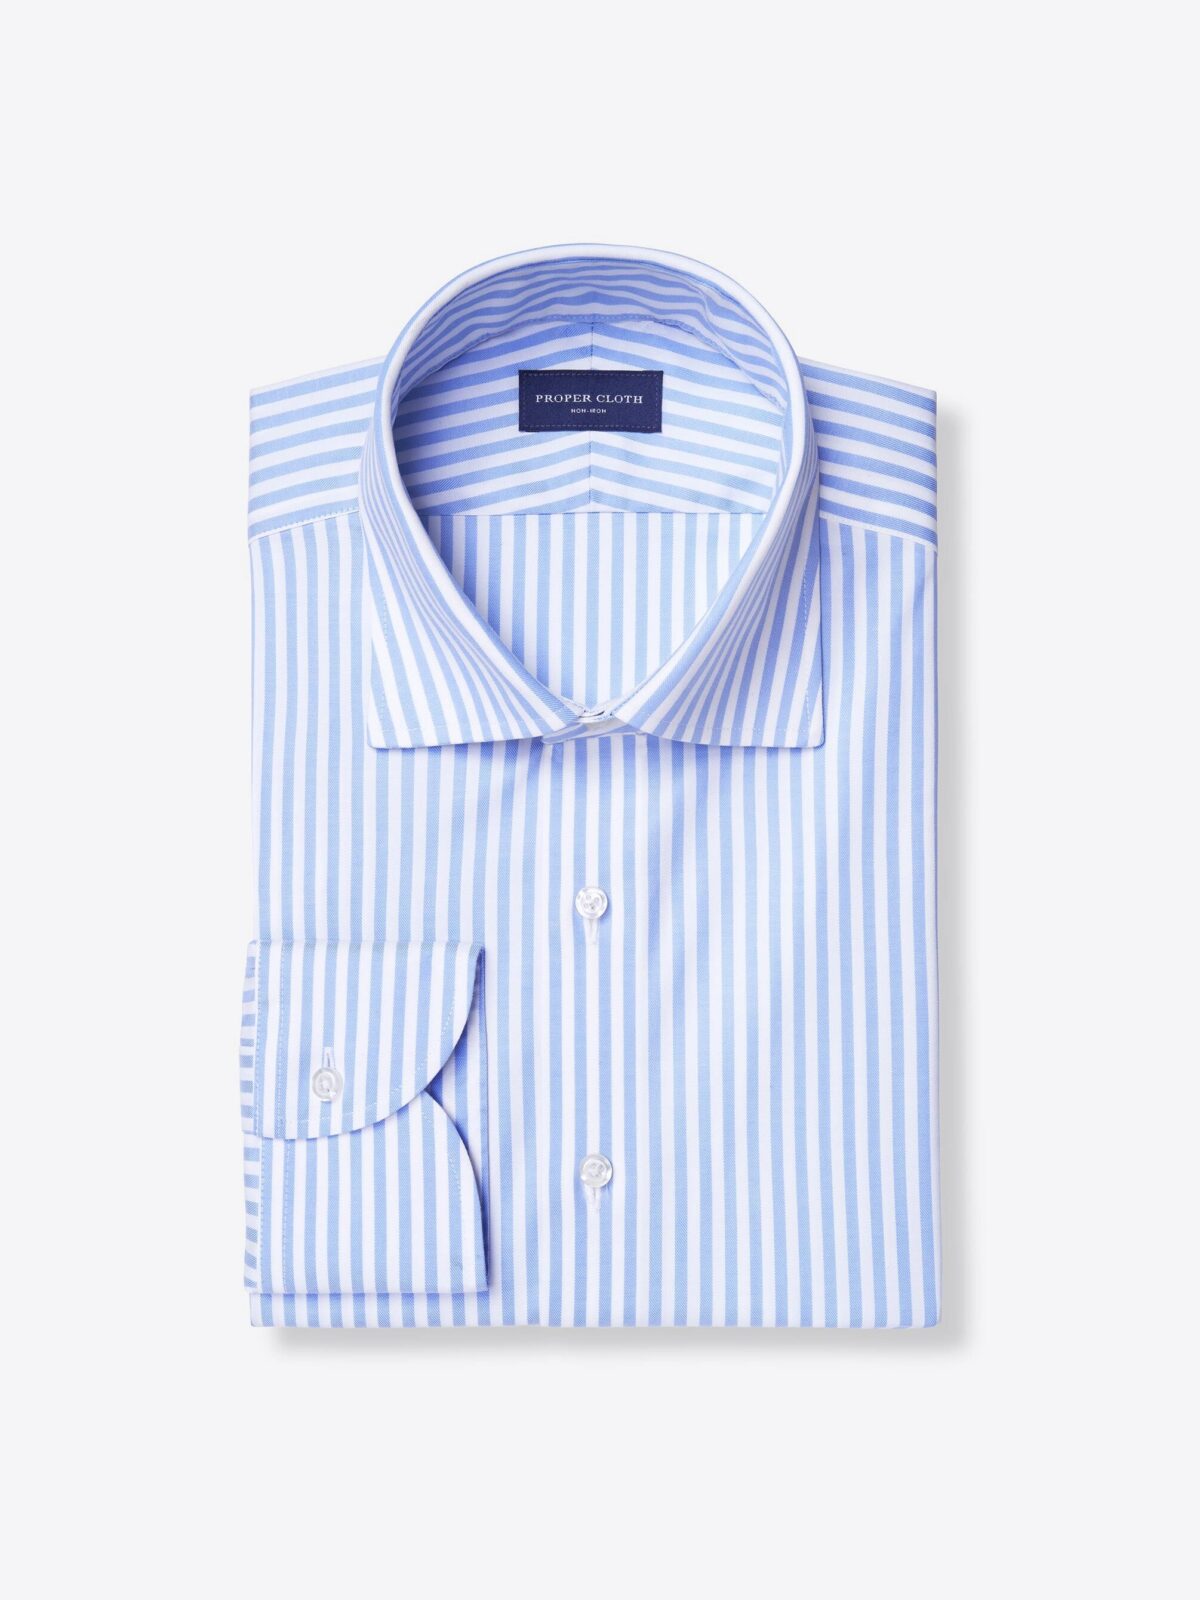 The Custom Non-Iron Shirt  Wrinkle-Free Performance - Proper Cloth